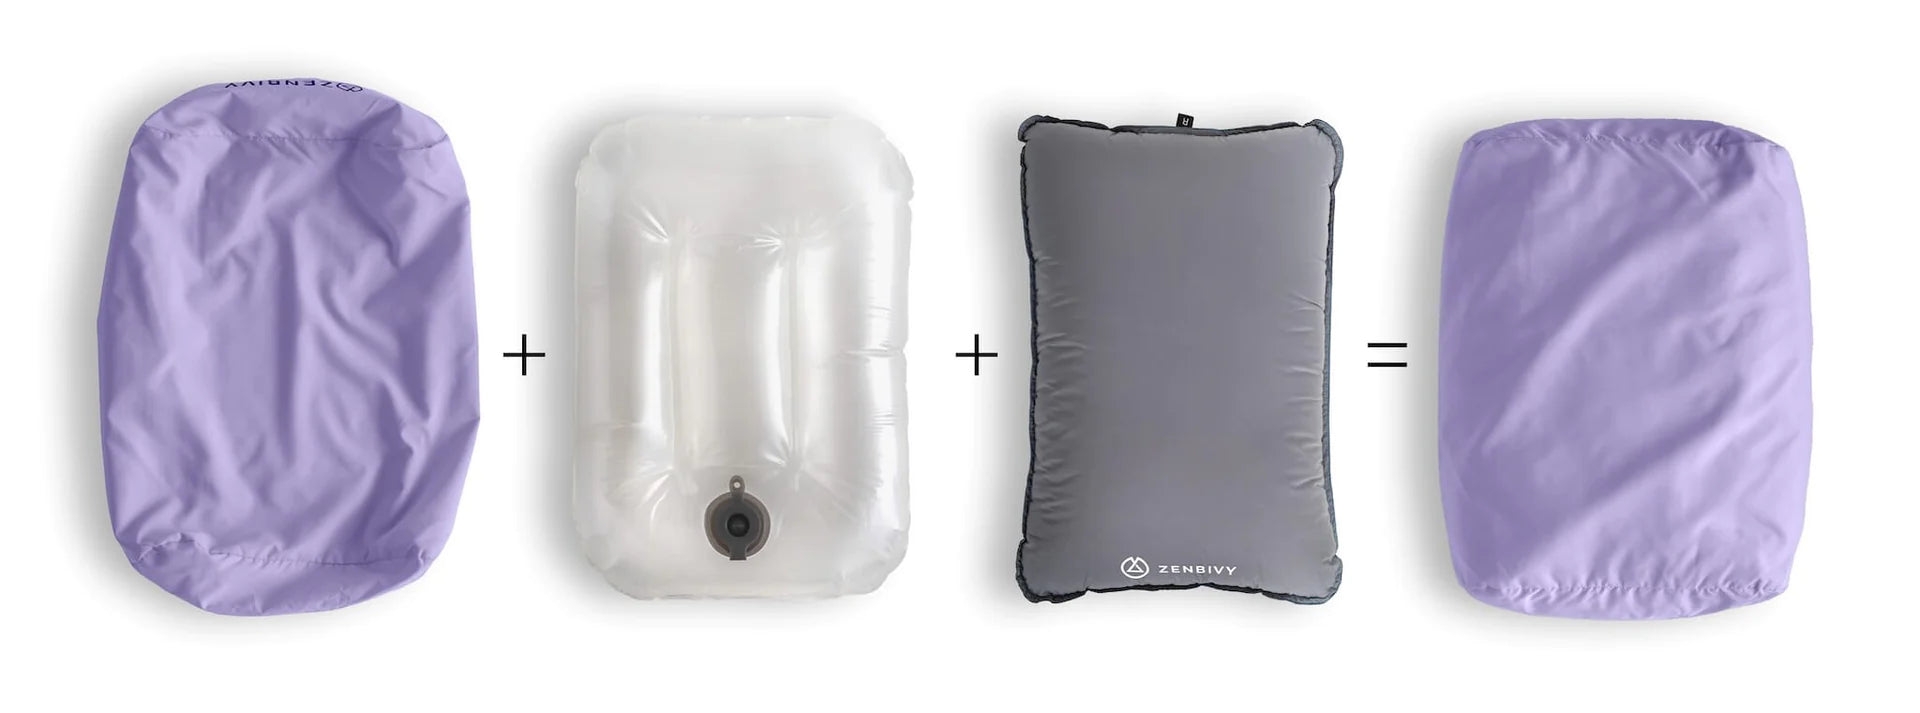 Pillows | Zenbivy Sleeping Bag Systems